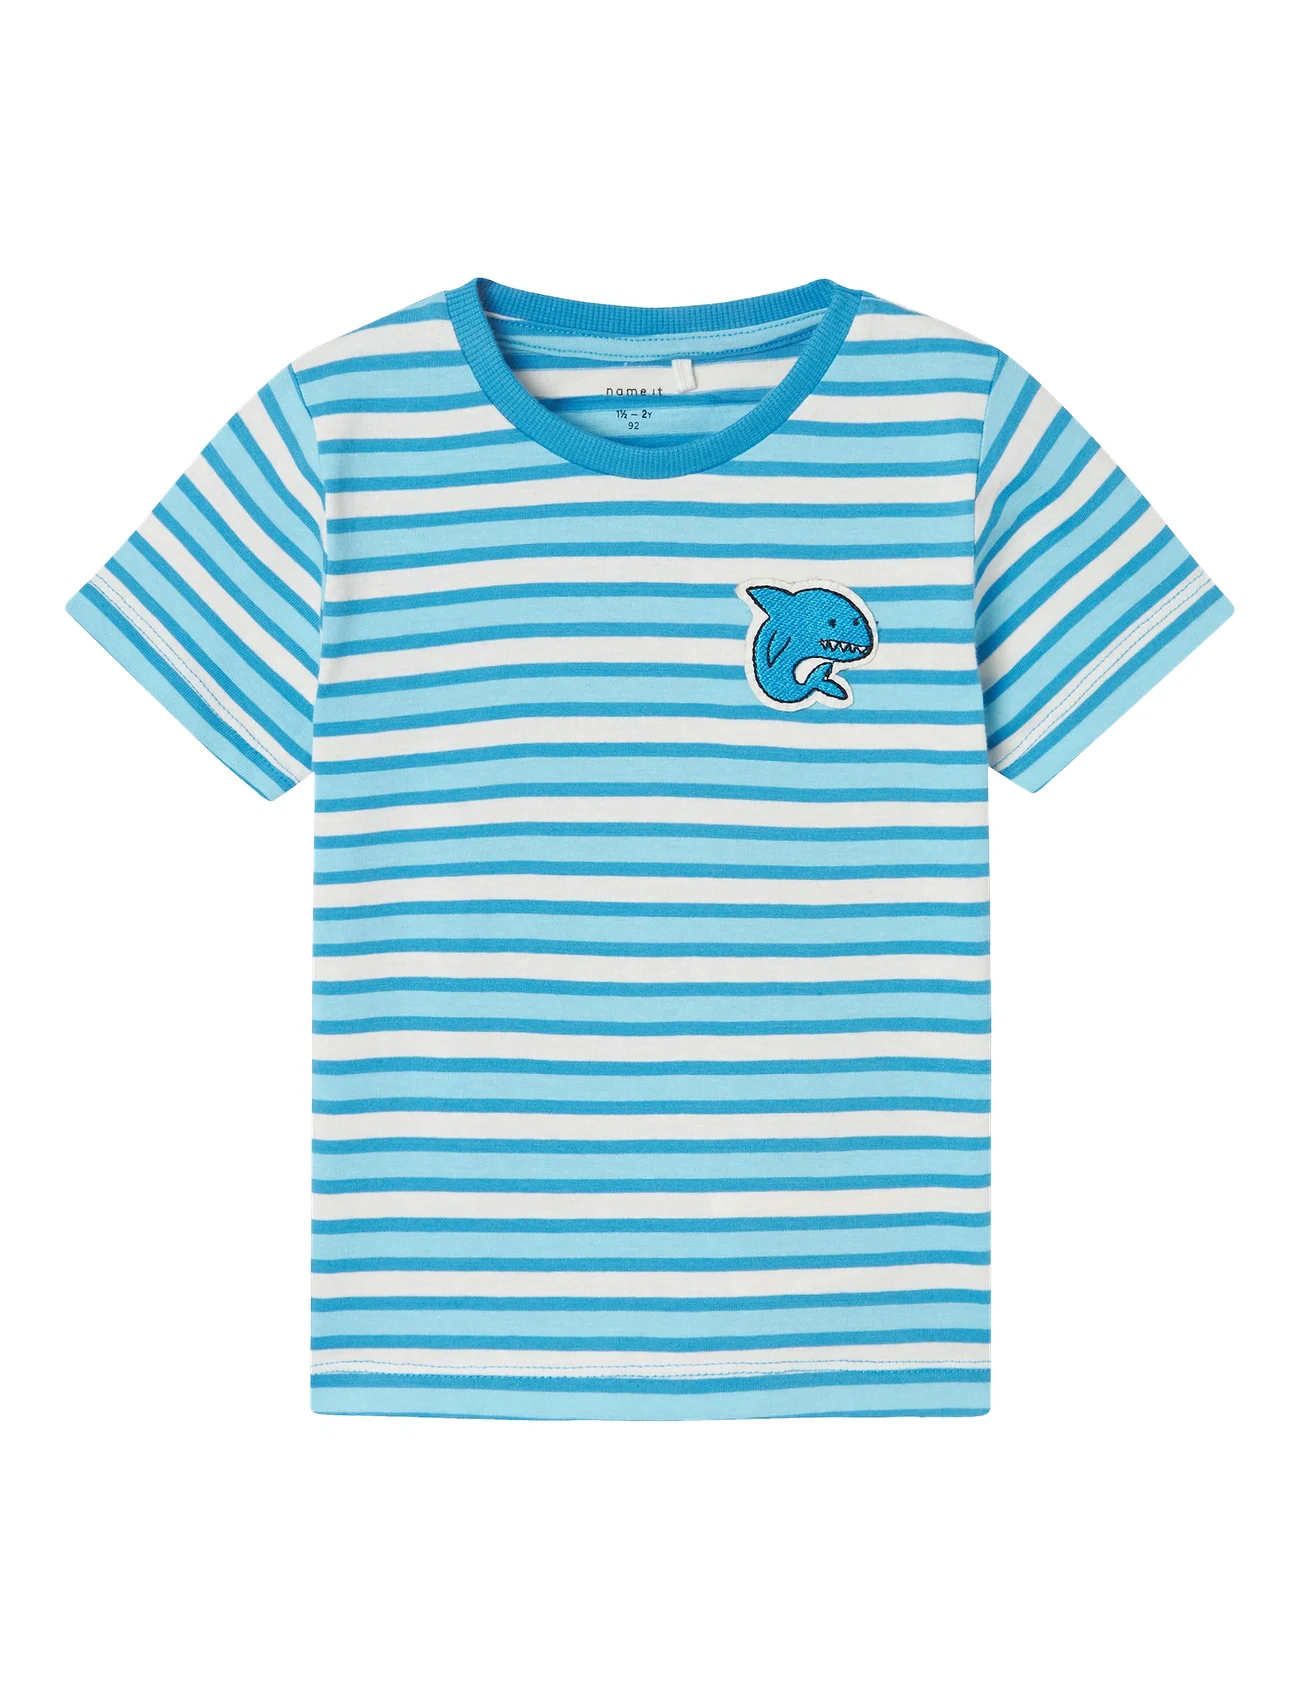 name it - NMMDIKE SS TOP PB - kortærmede t-shirts - swedish blue - 1